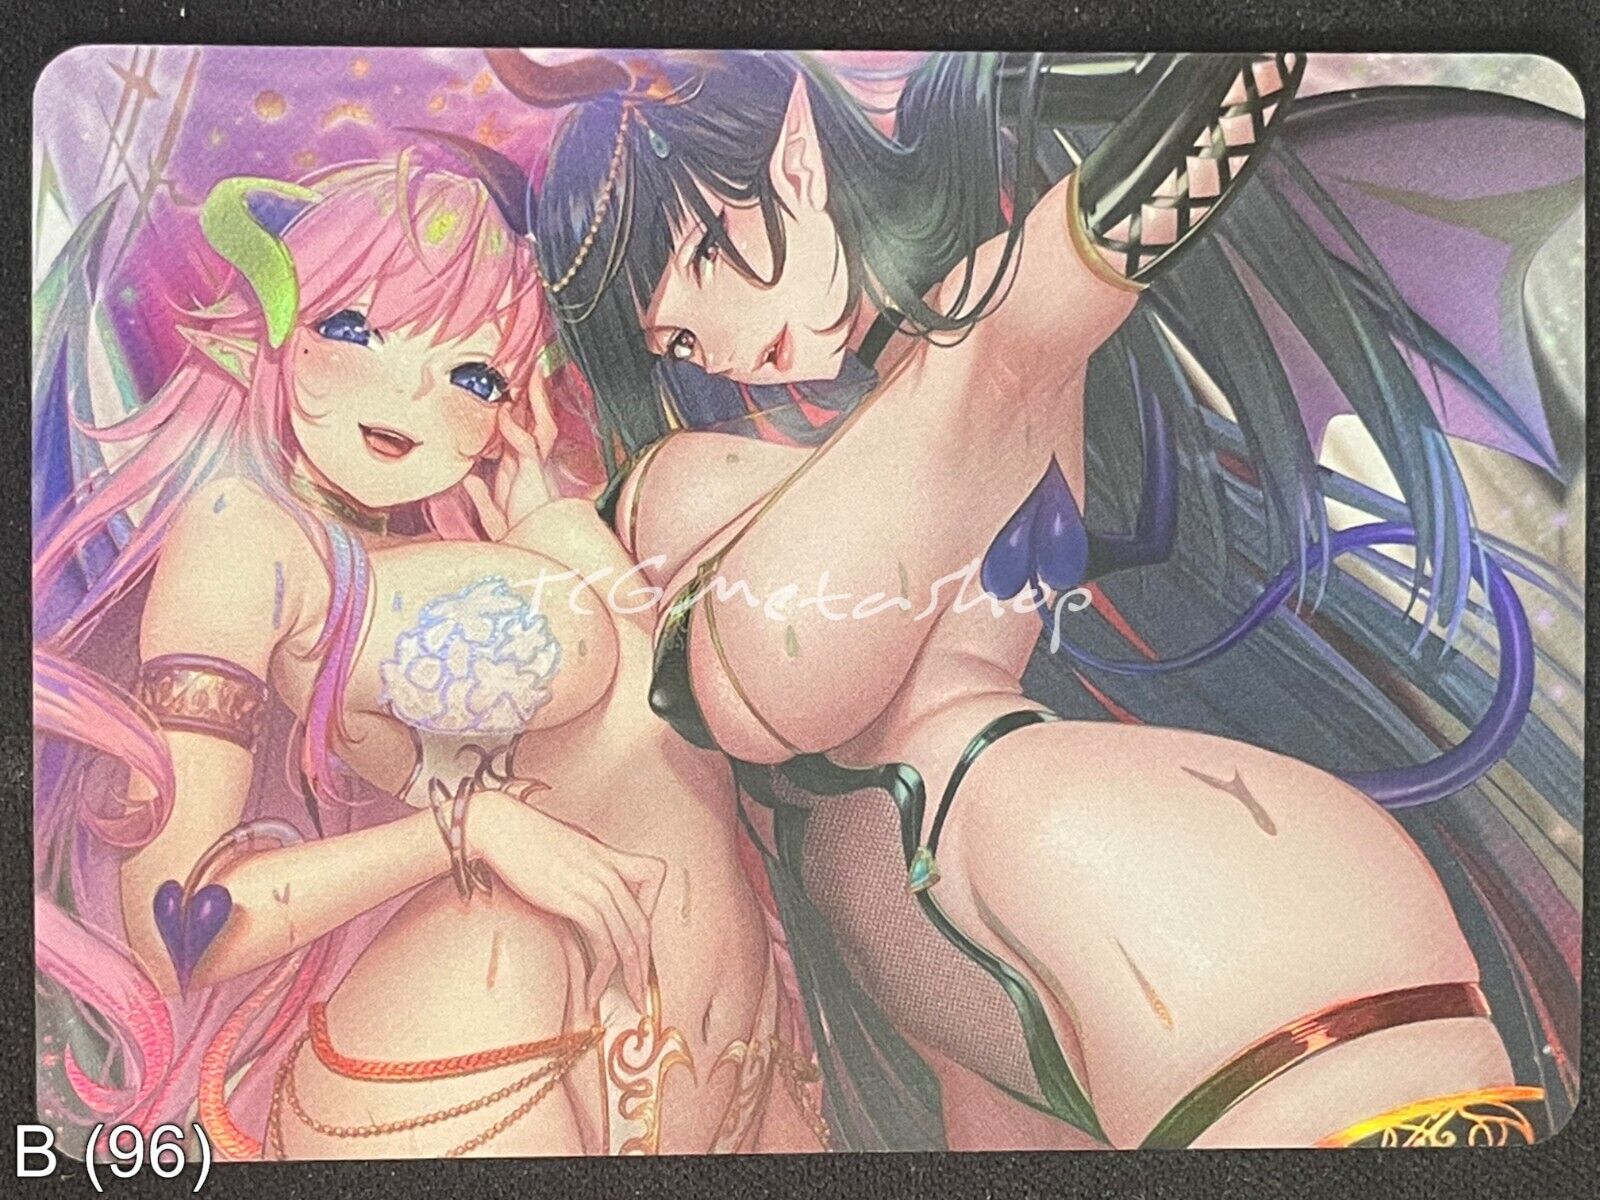 🔥 Sexy Girl Succubus Goddess Story Anime Waifu Card ACG B 96 🔥